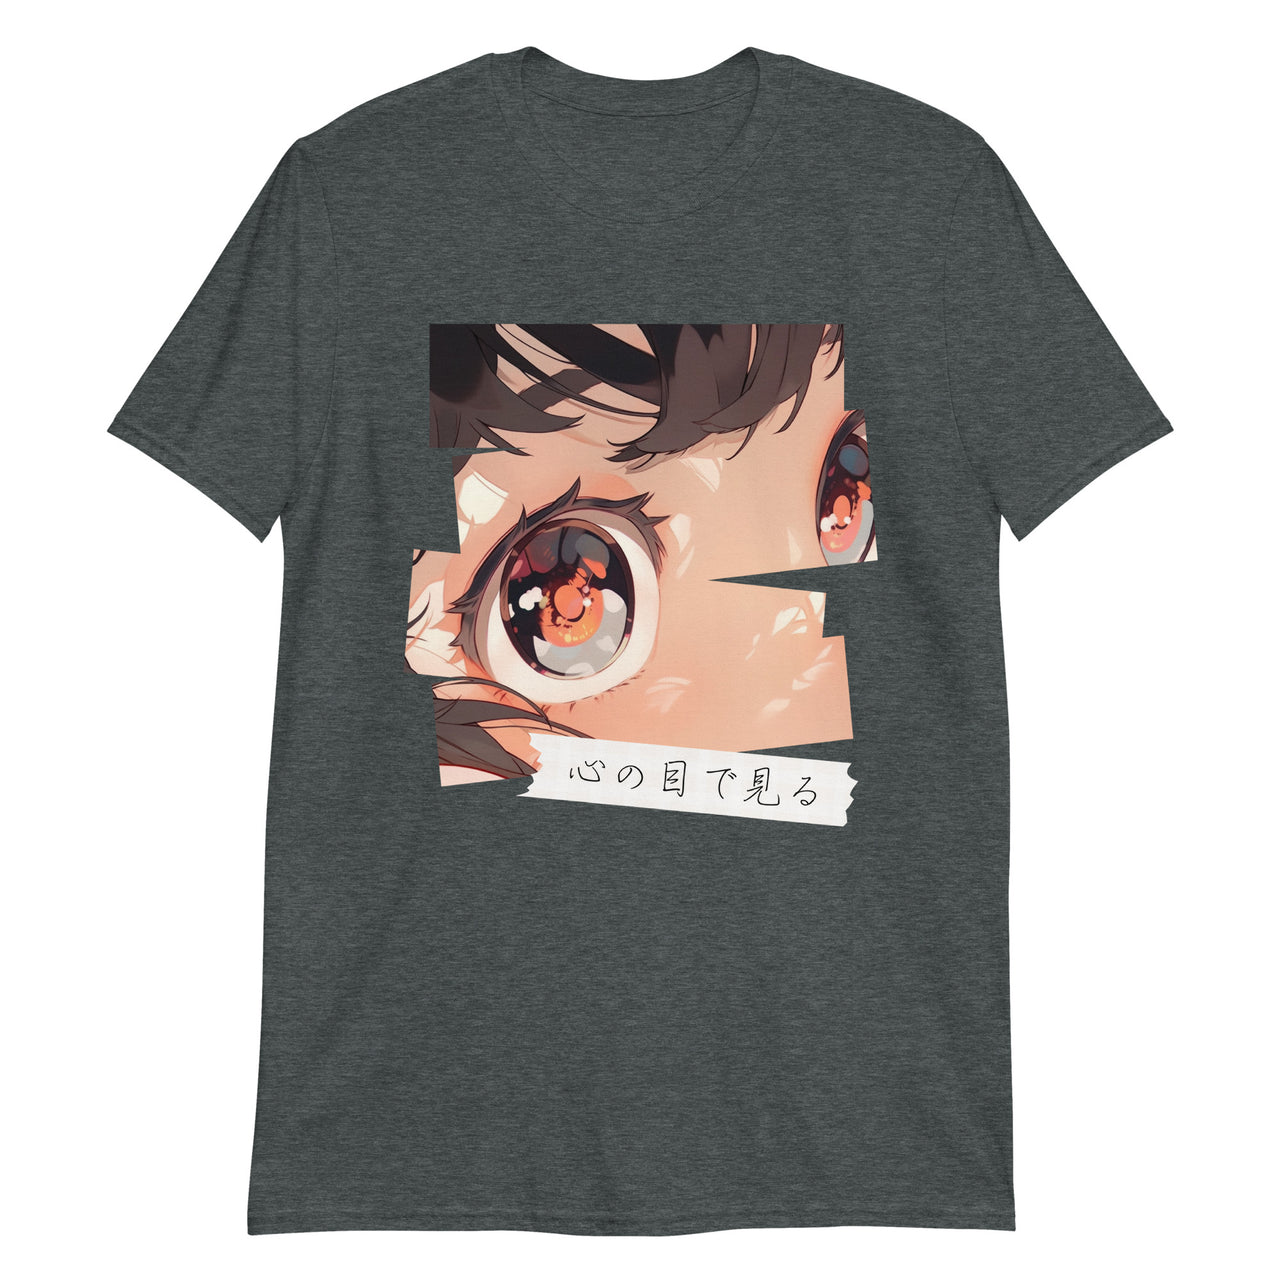 Big Anime Eyes Japanese Culture Art T-Shirt